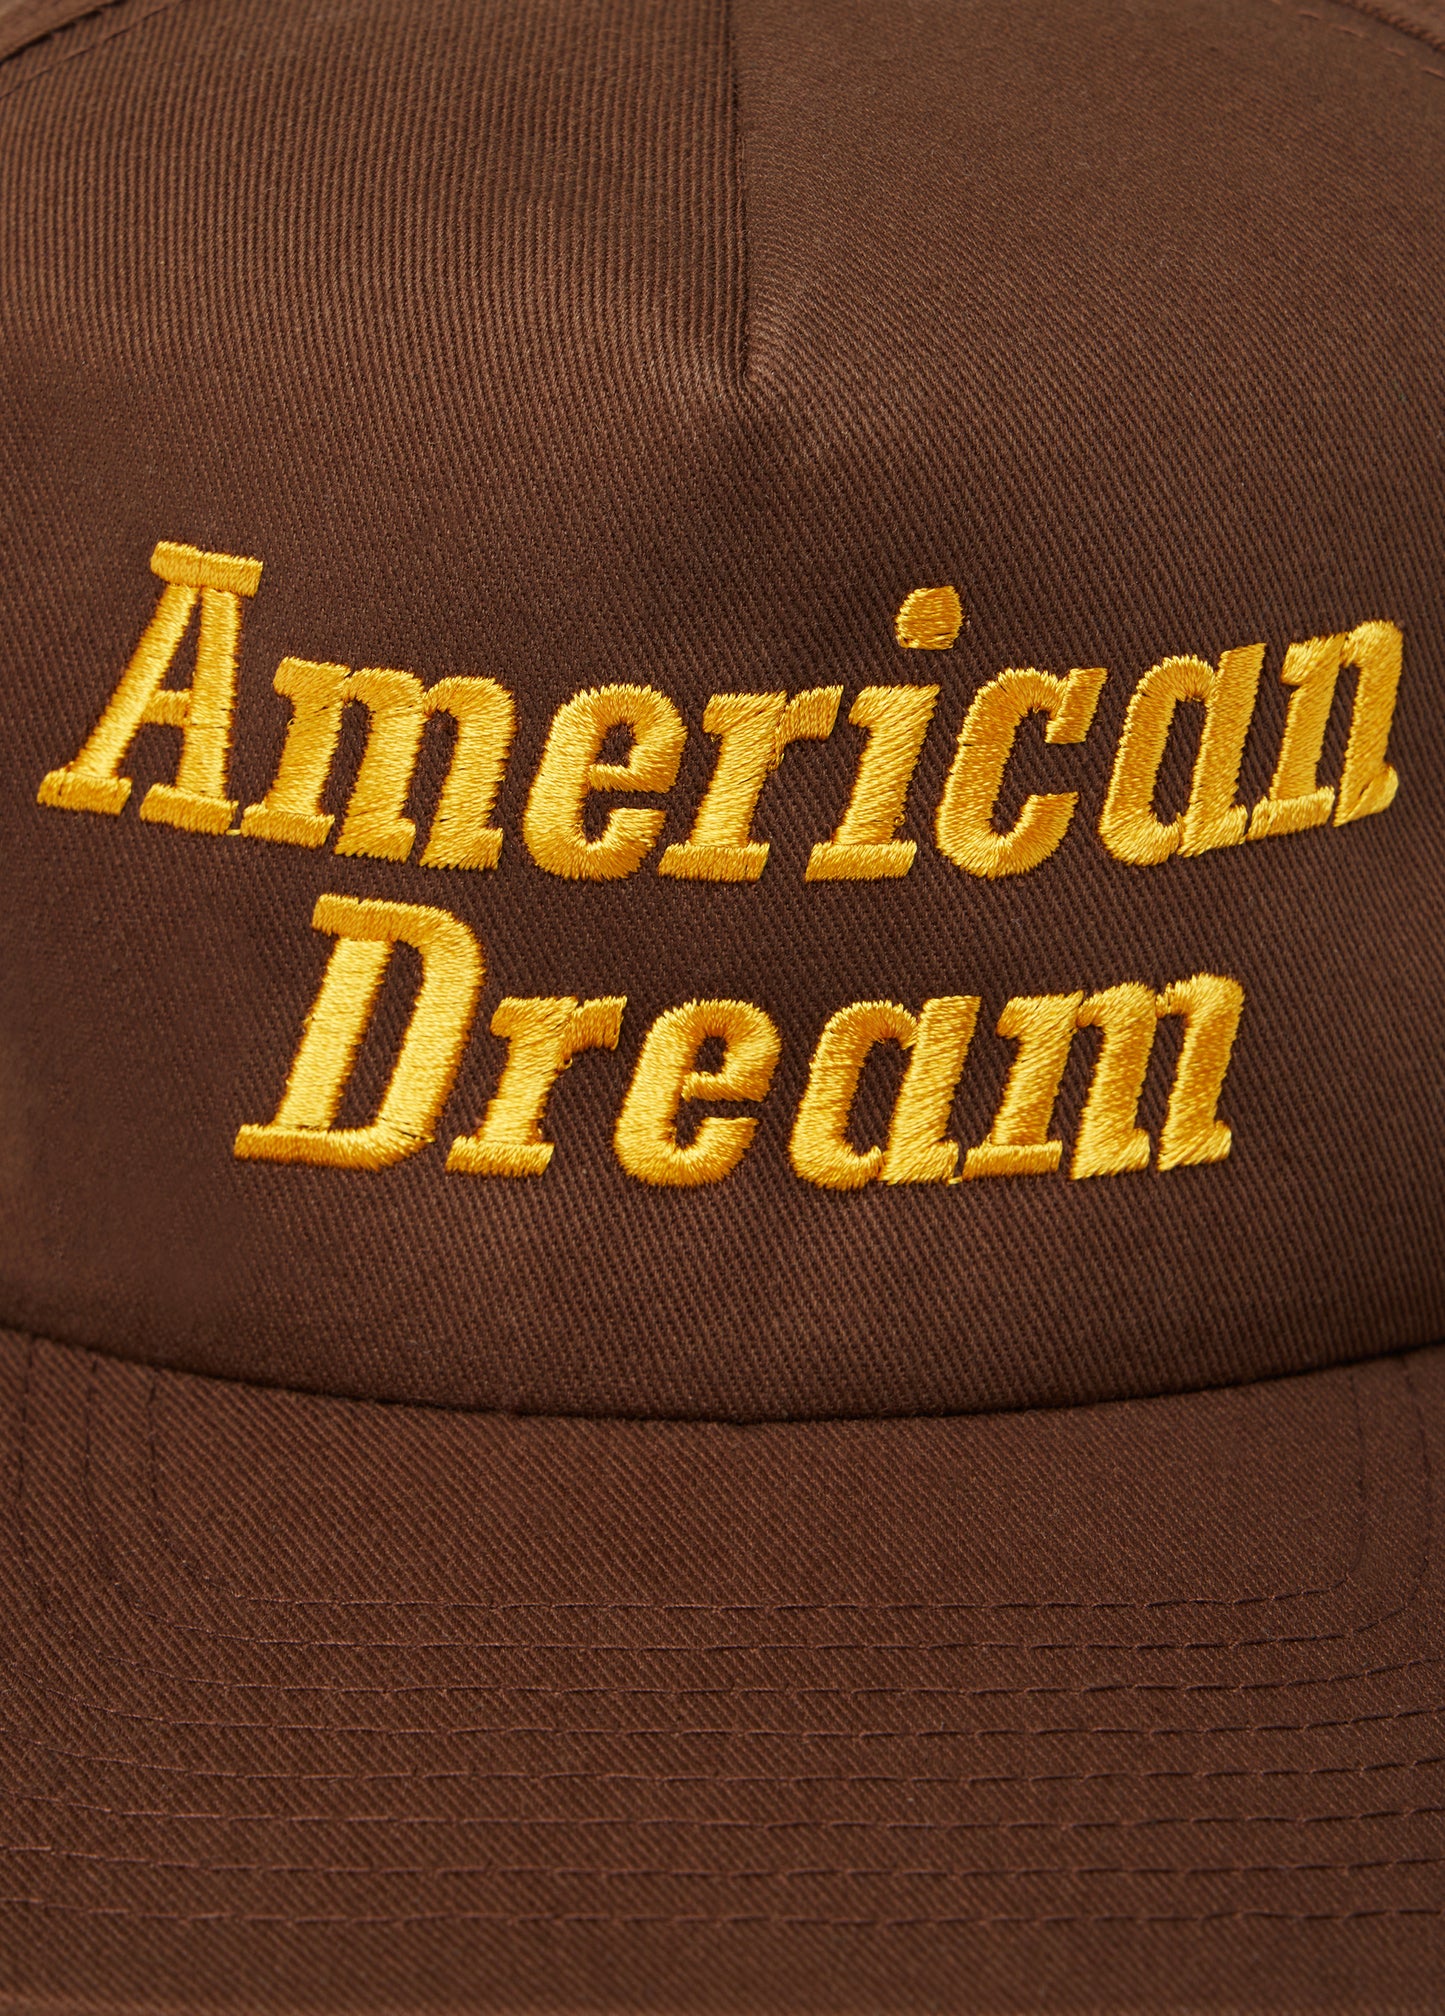 American Dream Hat | Brown